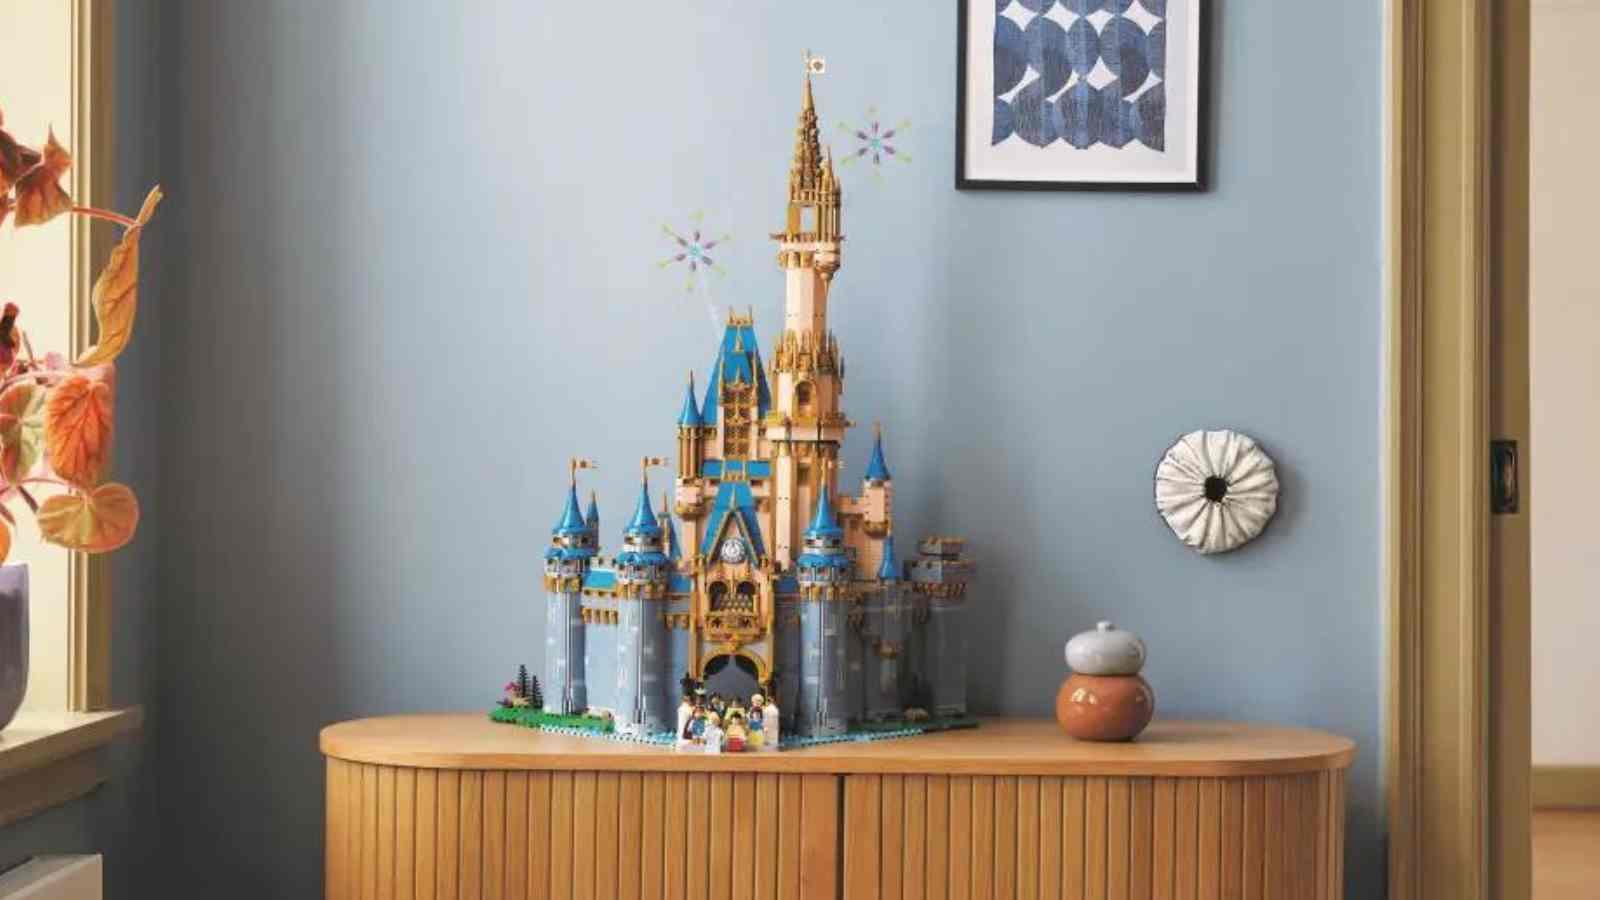 The LEGO Disney Castle on display